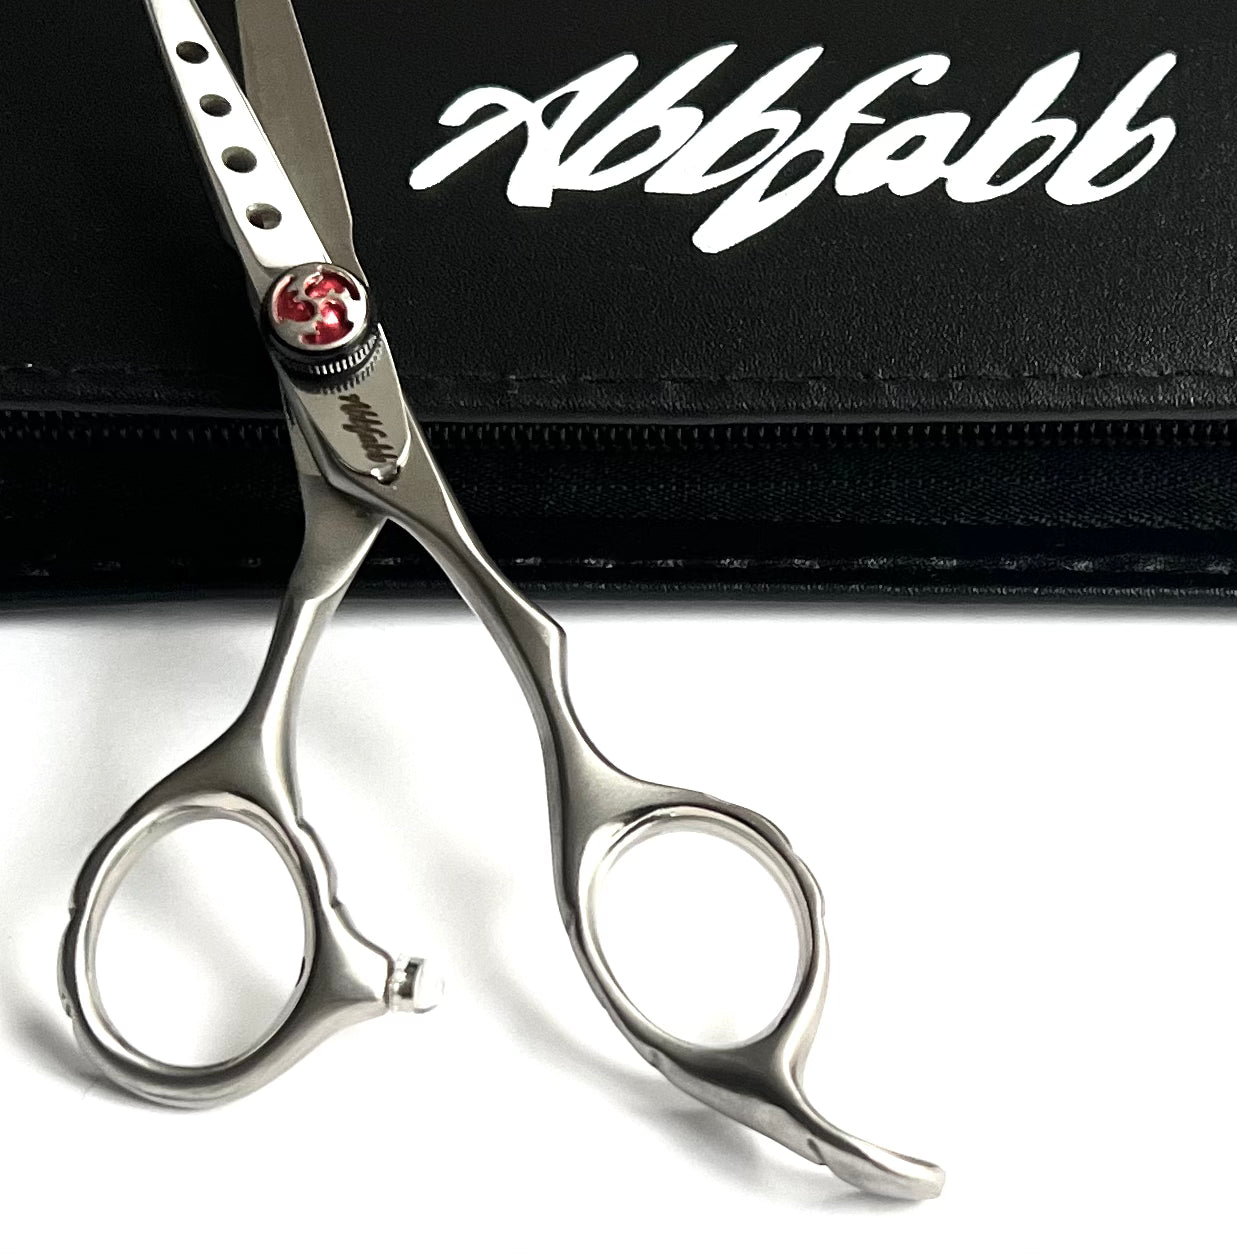 5" straight dog grooming scissor by Abbfabb